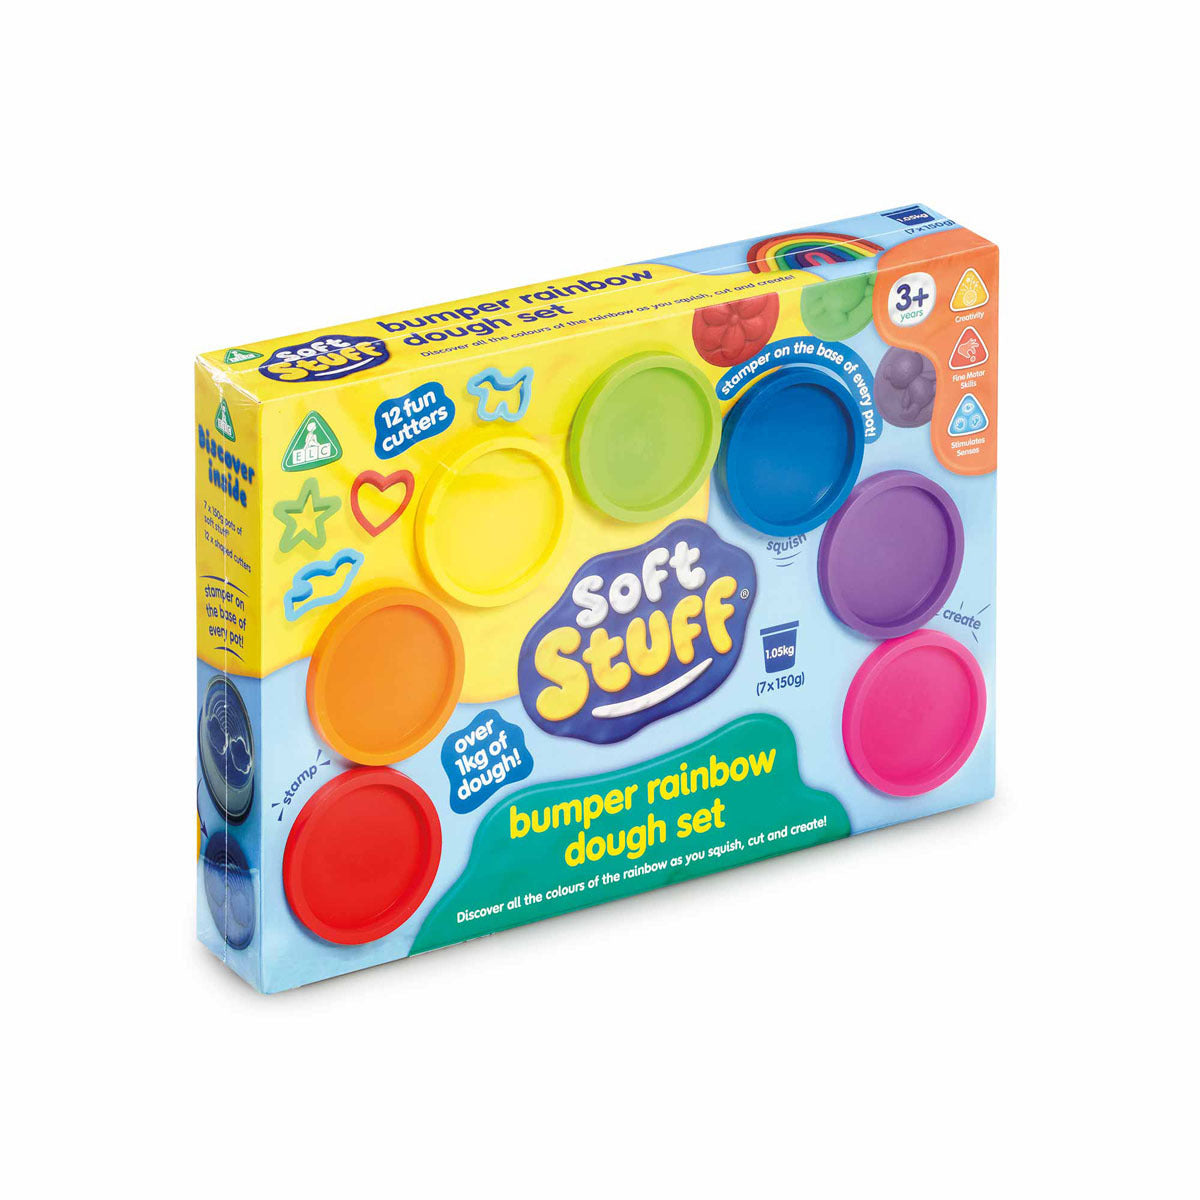 Soft Stuff Bumper Rainbow Dough Set